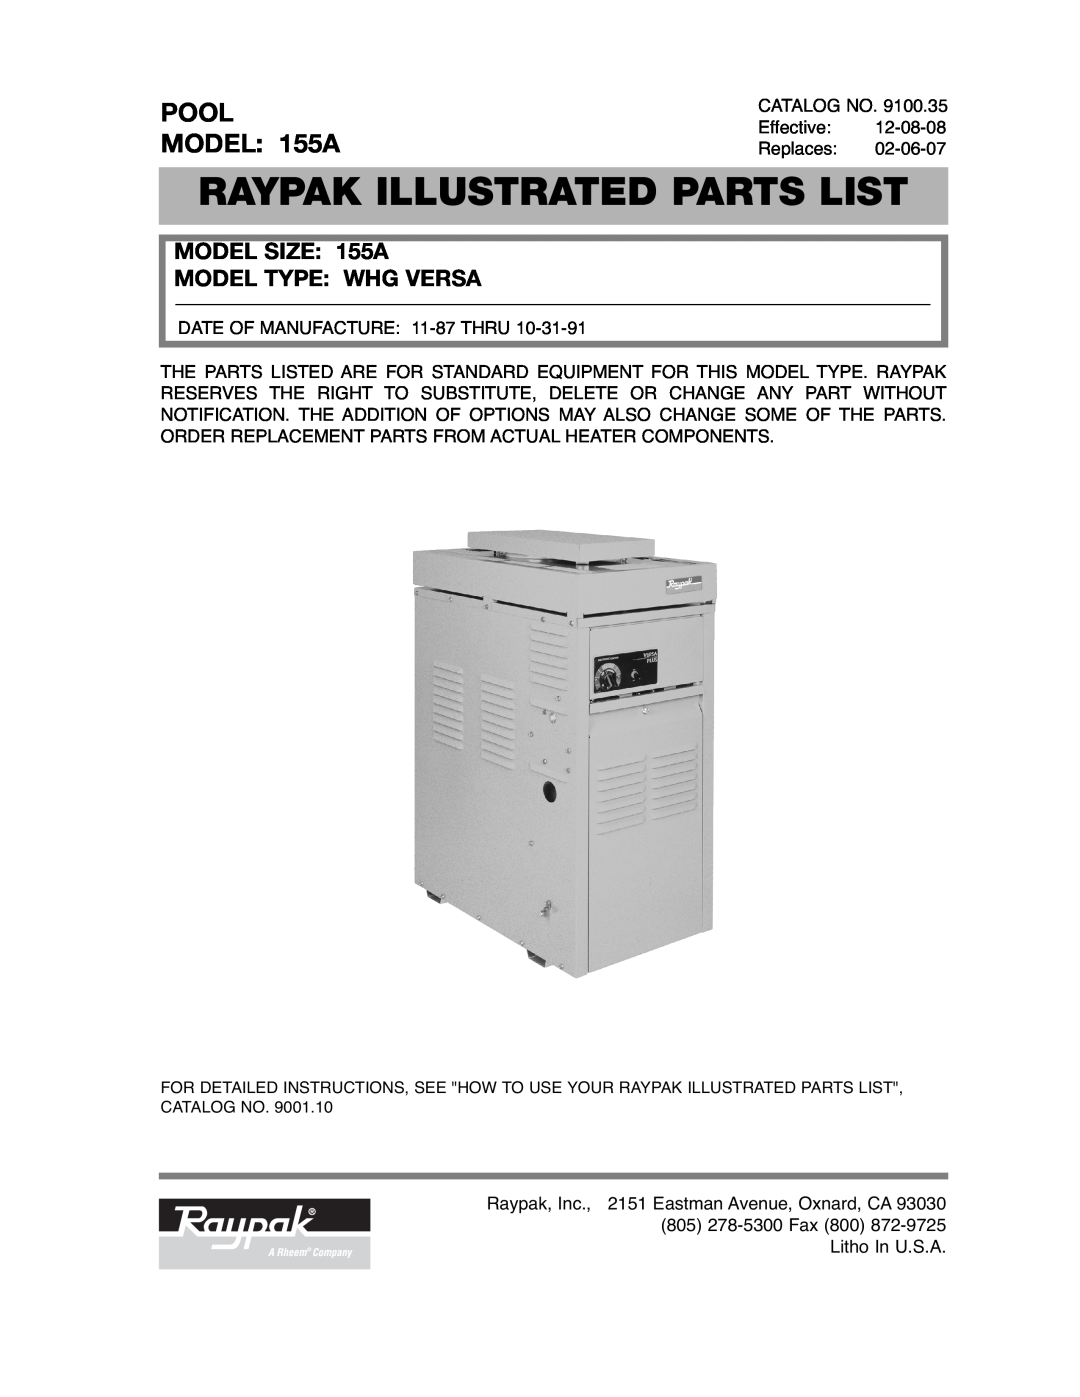 Raypak manual MODEL SIZE 155A MODEL TYPE WHG VERSA, Raypak Illustrated Parts List, POOL MODEL: 155A 